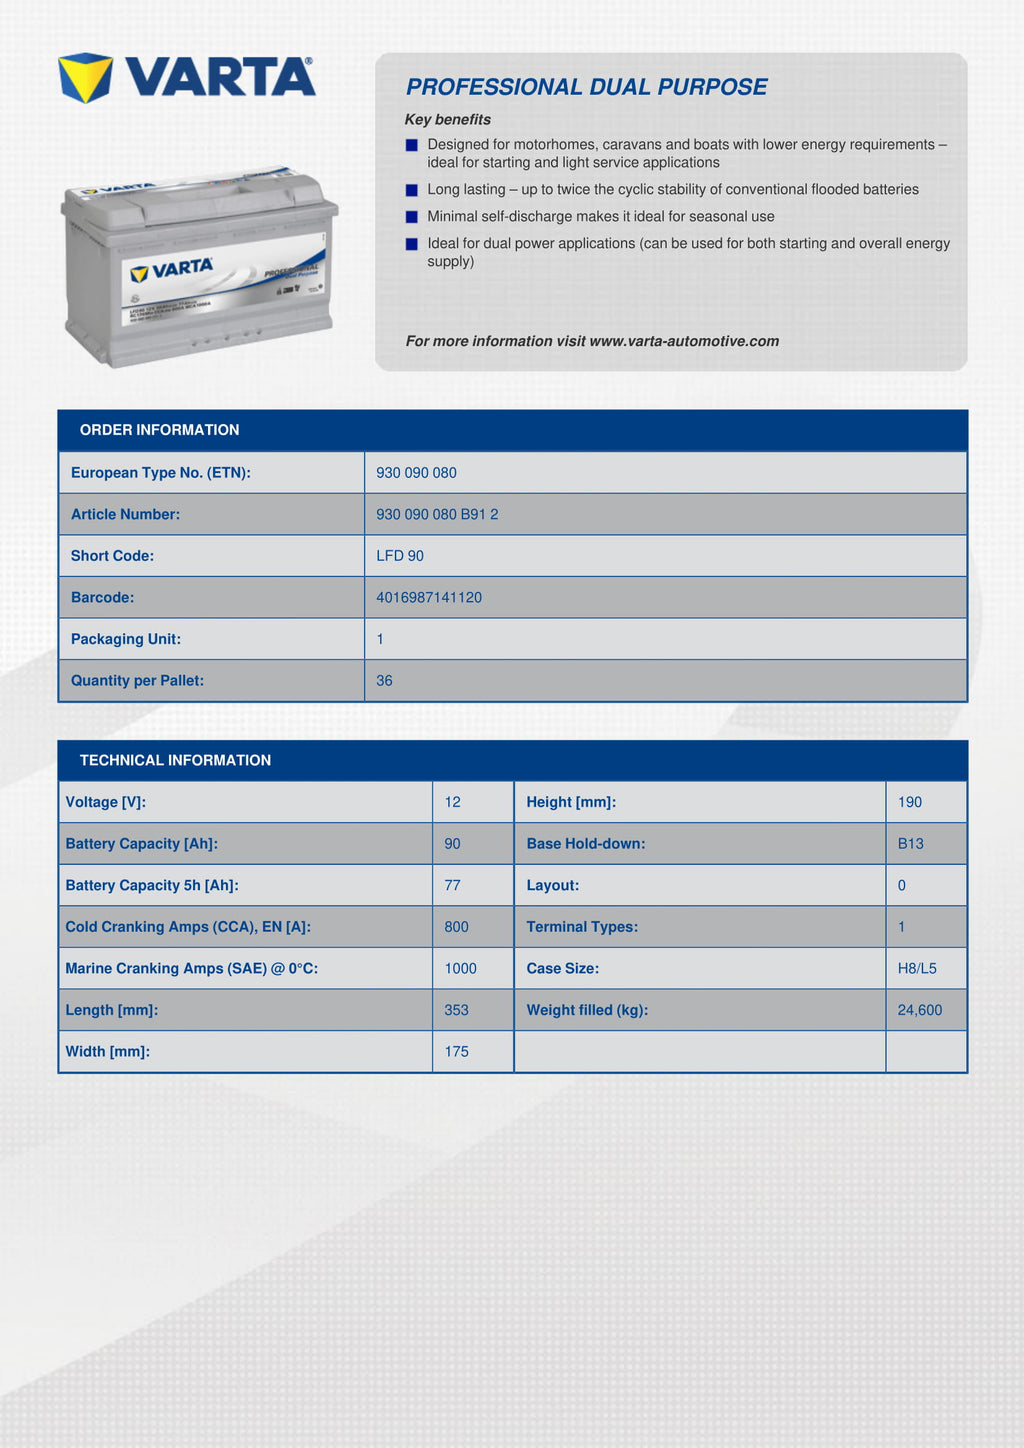 BATTERIE VARTA DUAL PURPOSE EFB LED95 12V 95AH 850A - Batteries